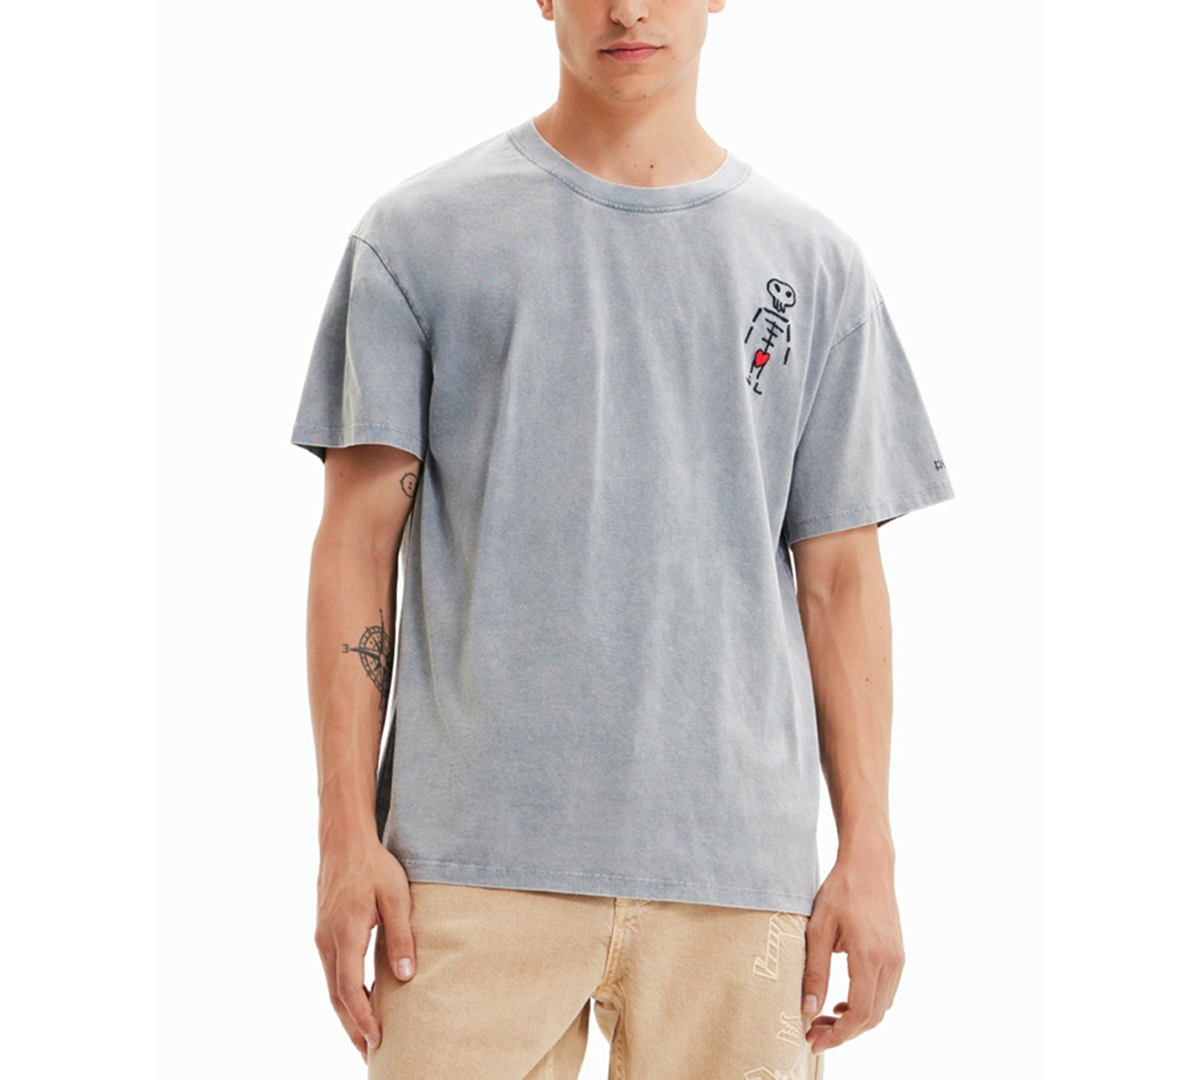 Desigual Men's Skull Graphic Short-Sleeve T-Shirt